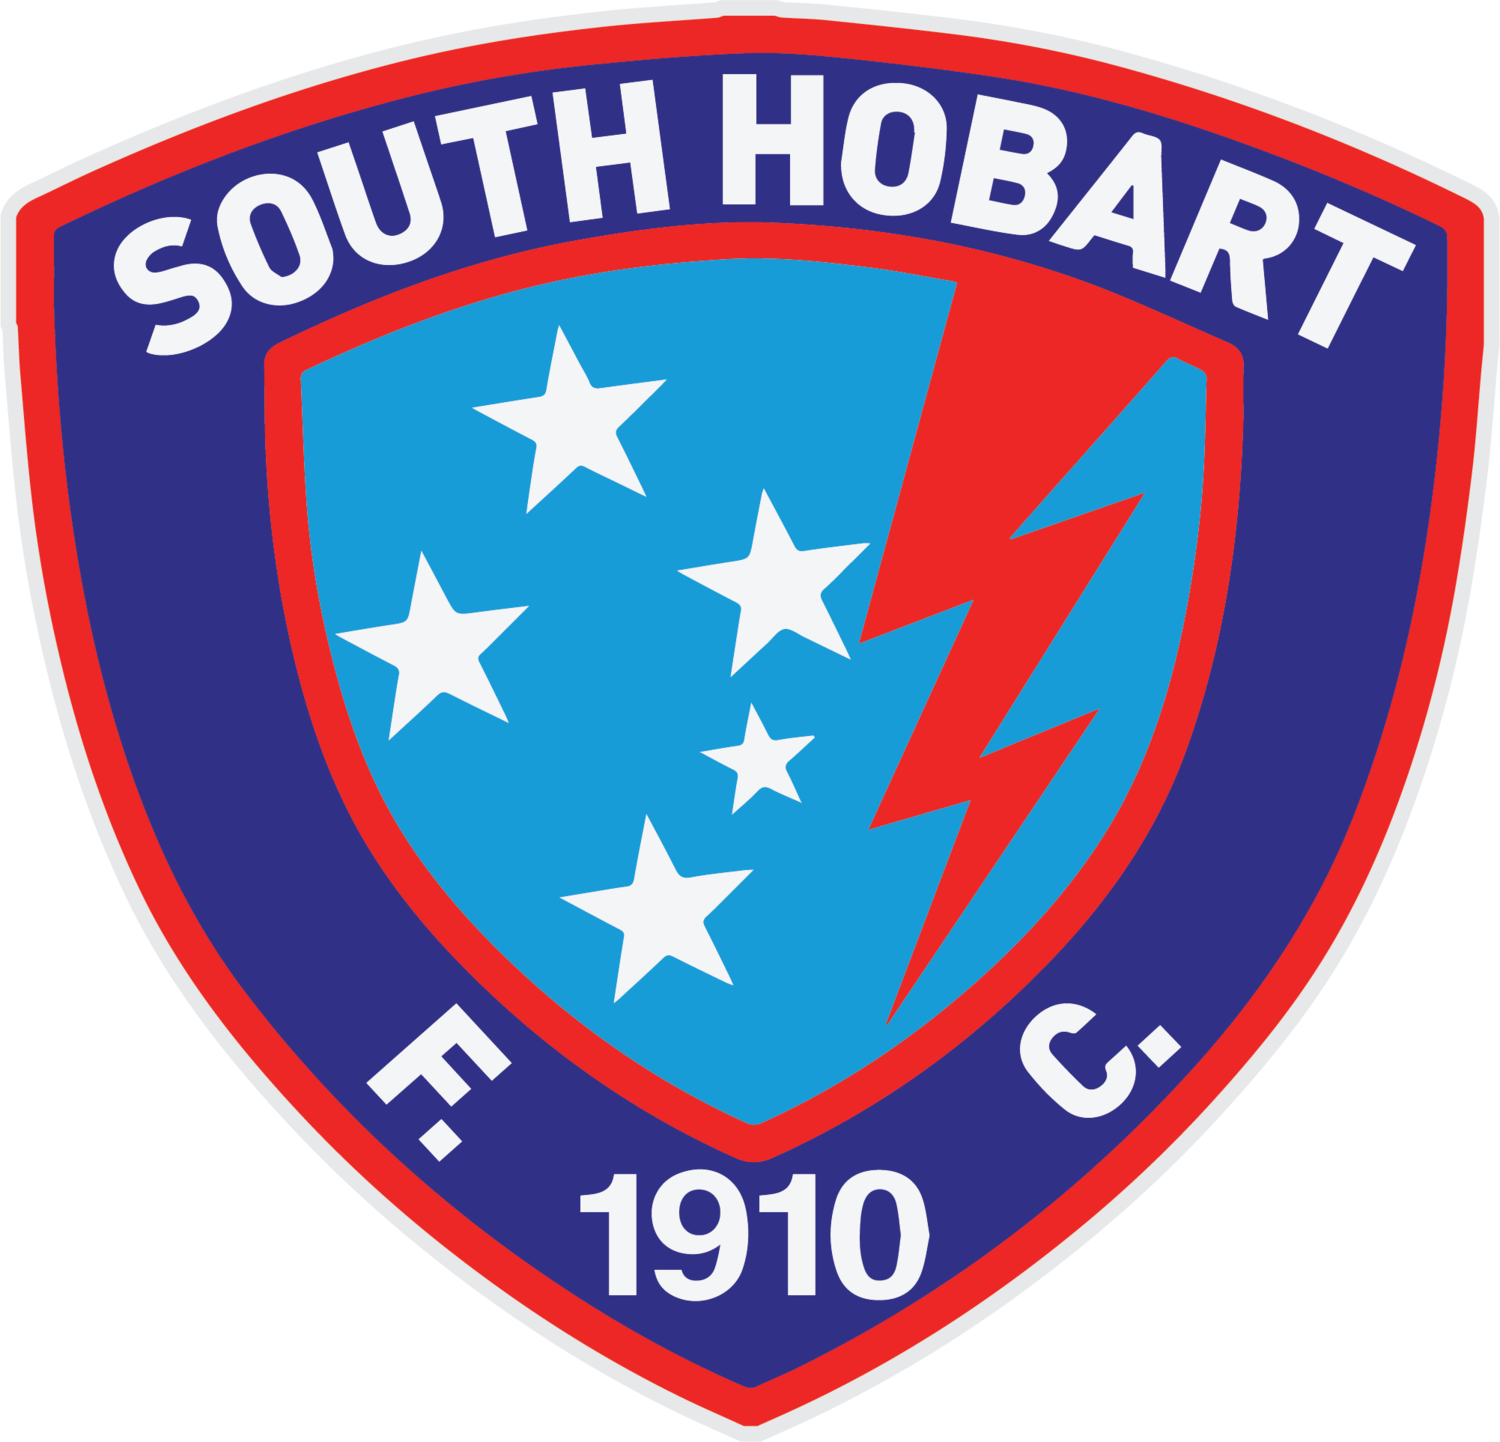 Image result for south hobart fc